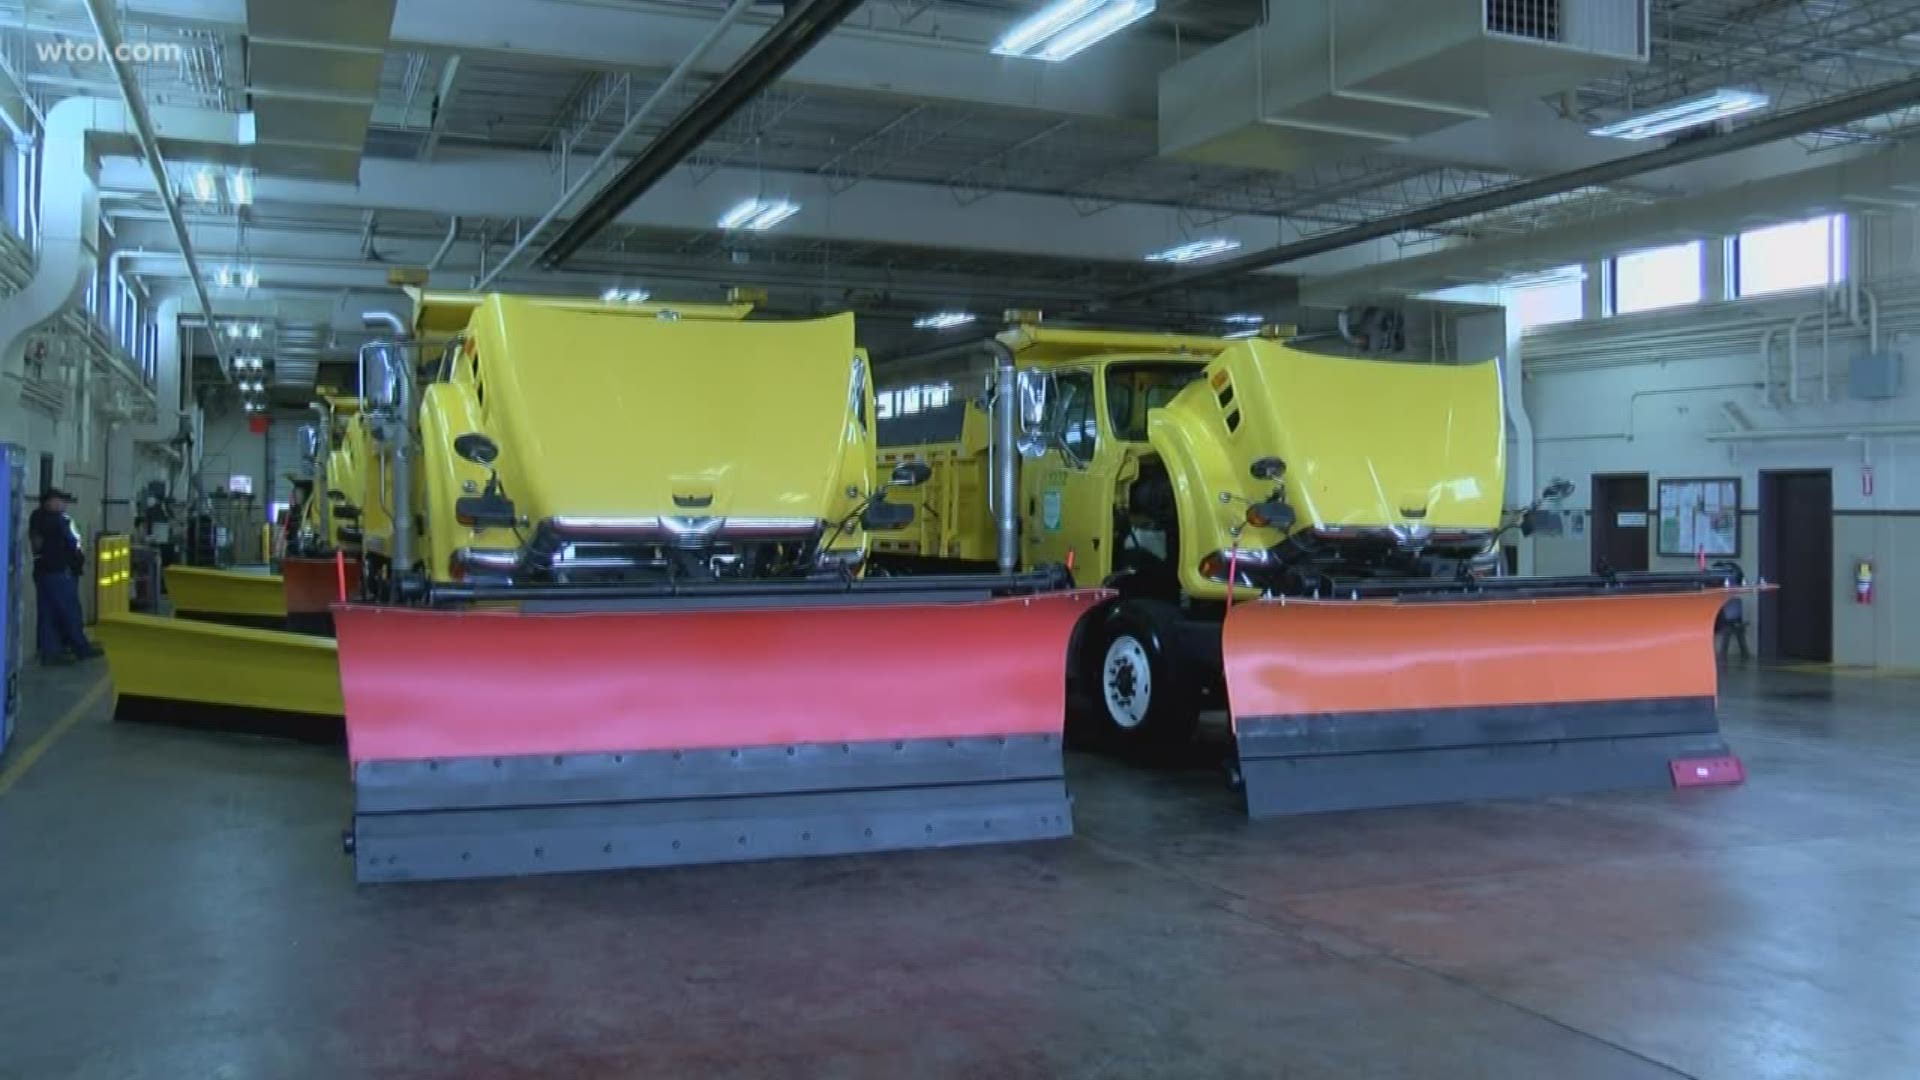 Ohio Turnpike snow and ice fleet is ready for the 2019-2020 season